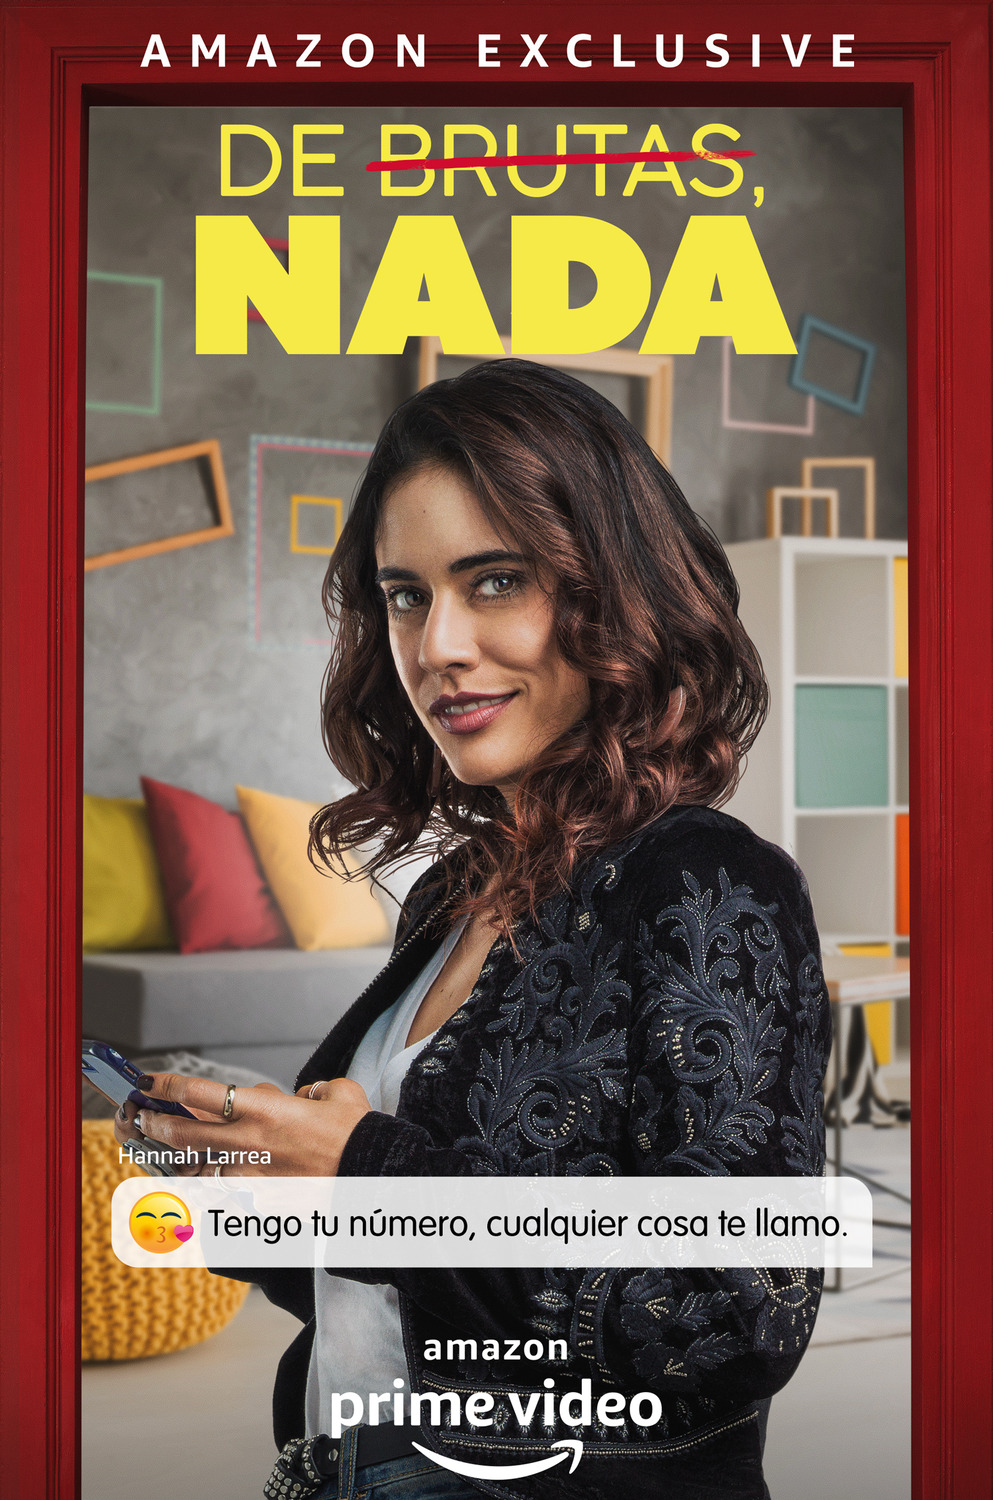 Extra Large TV Poster Image for De Brutas, Nada (#9 of 22)